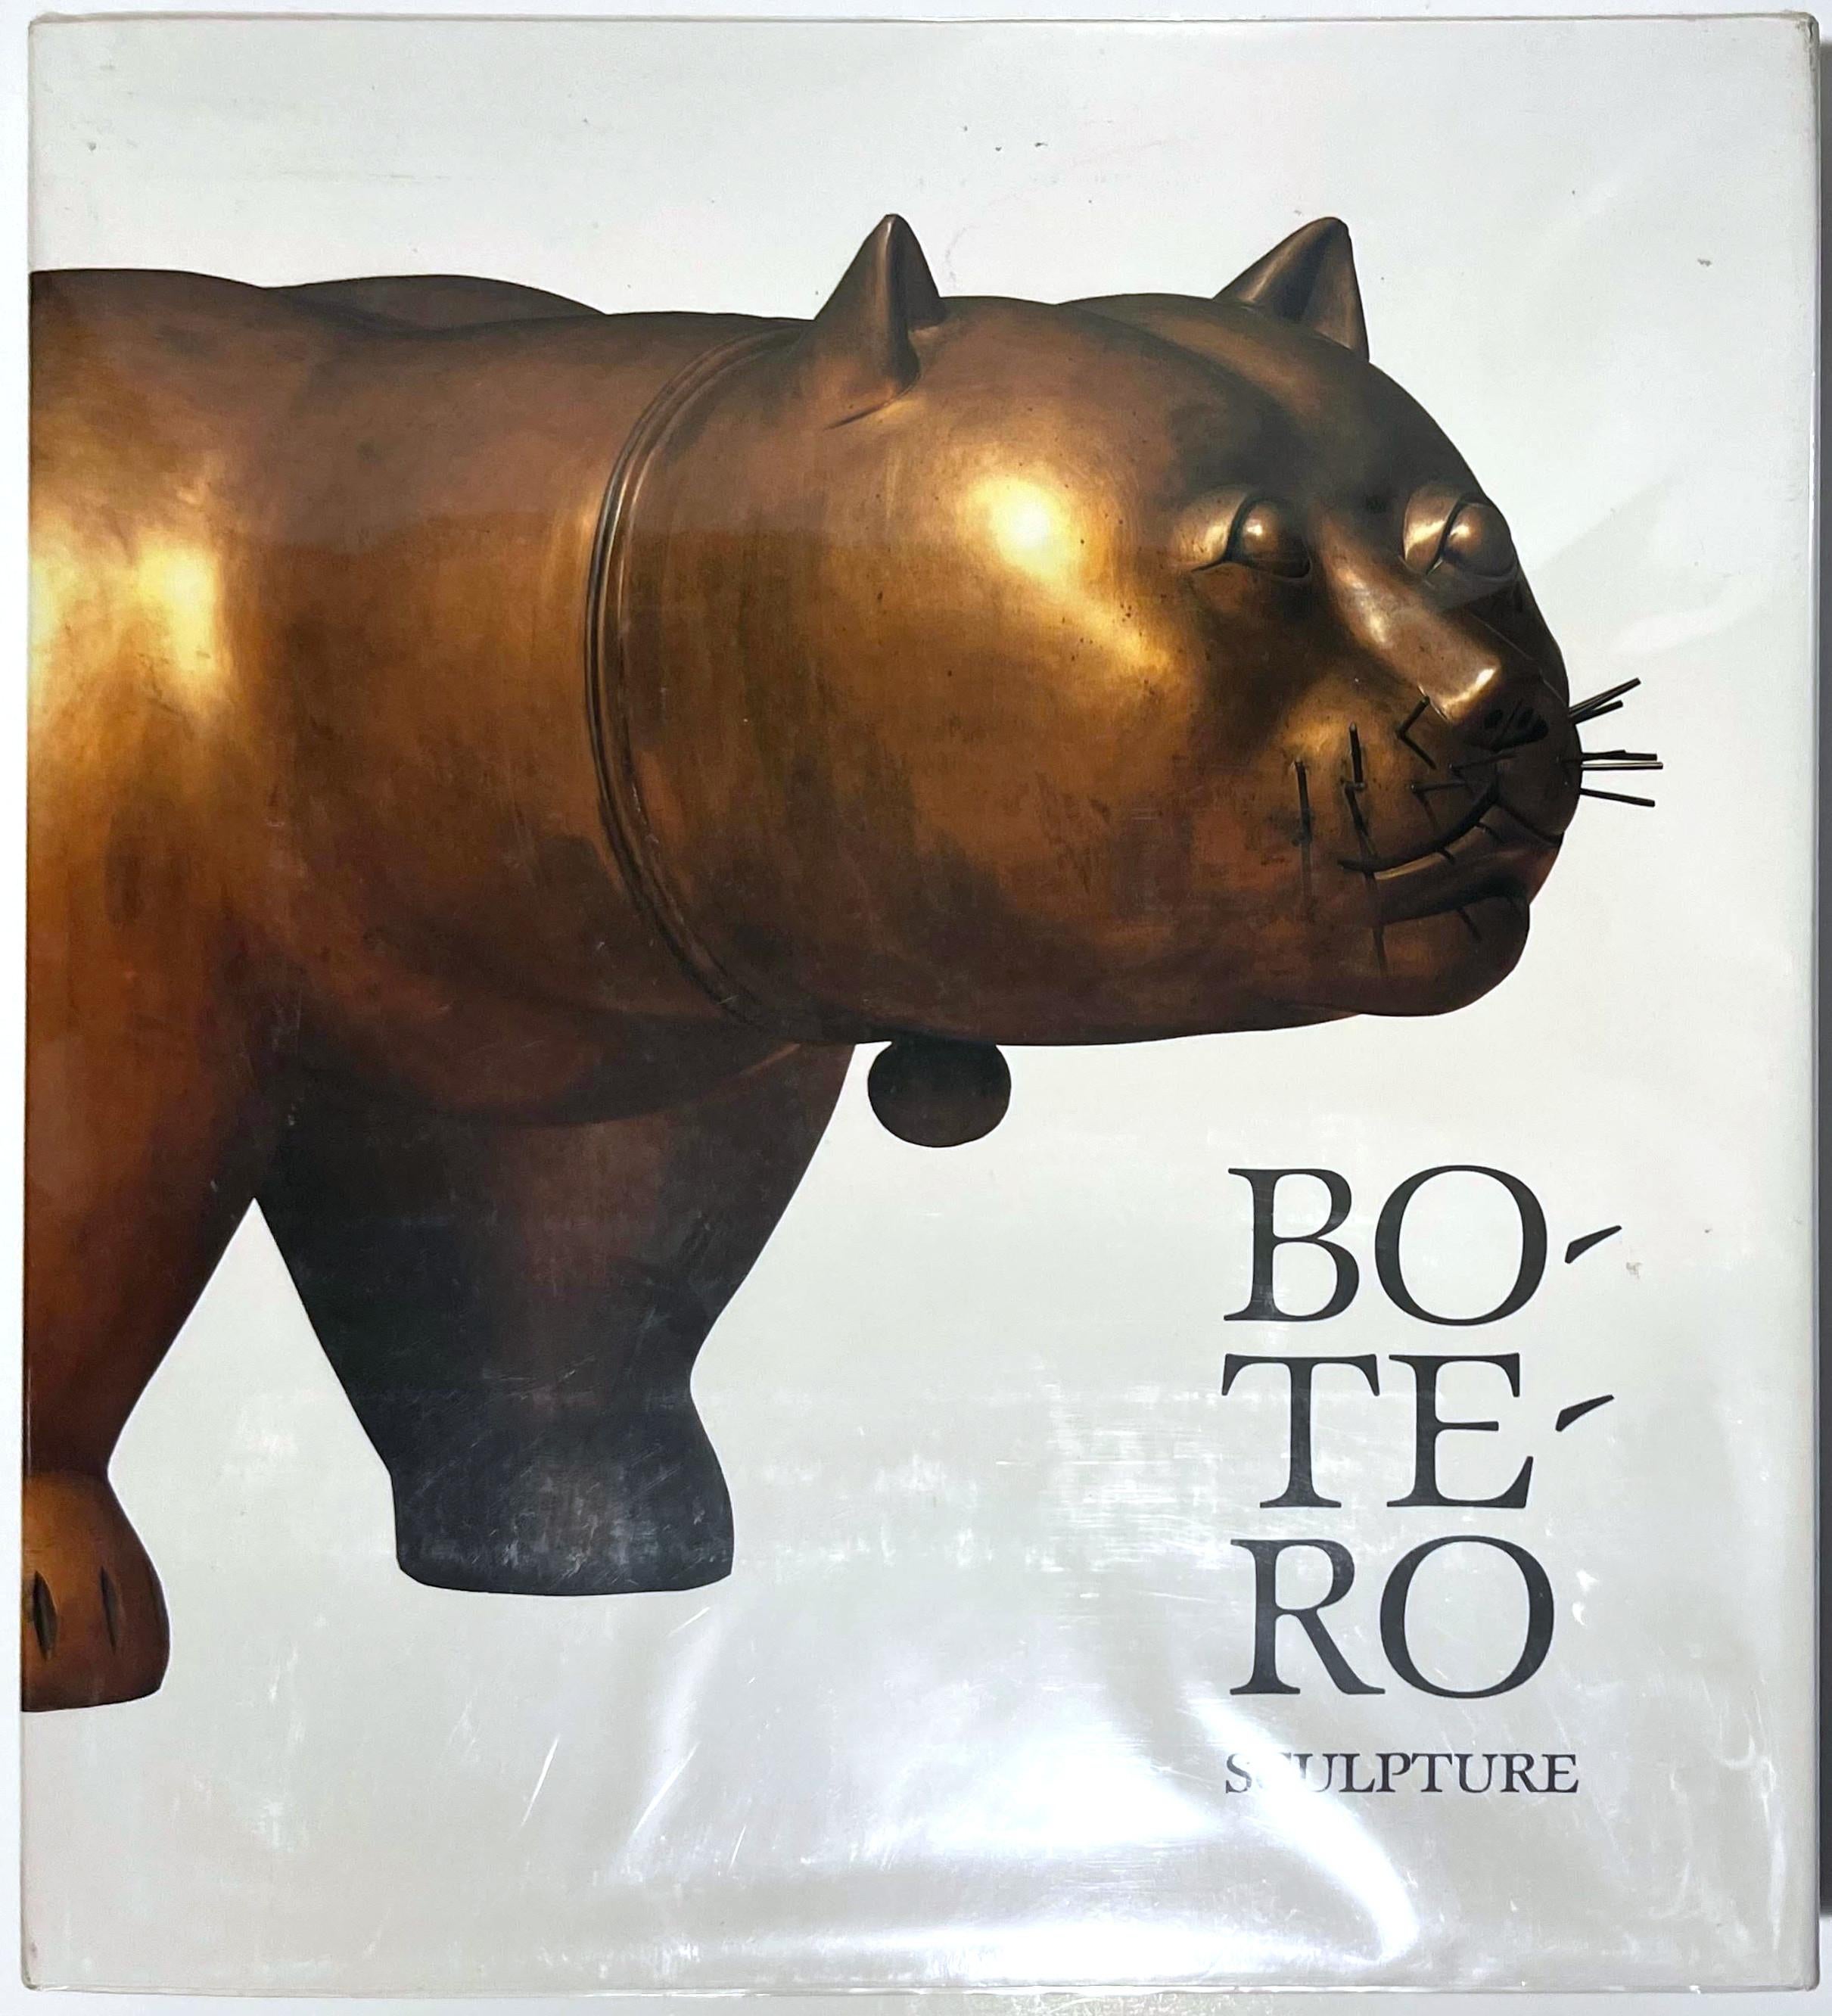 Monograph: BOTERO SCULPTURE (hardback book, hand signed by Fernando Botero) 1